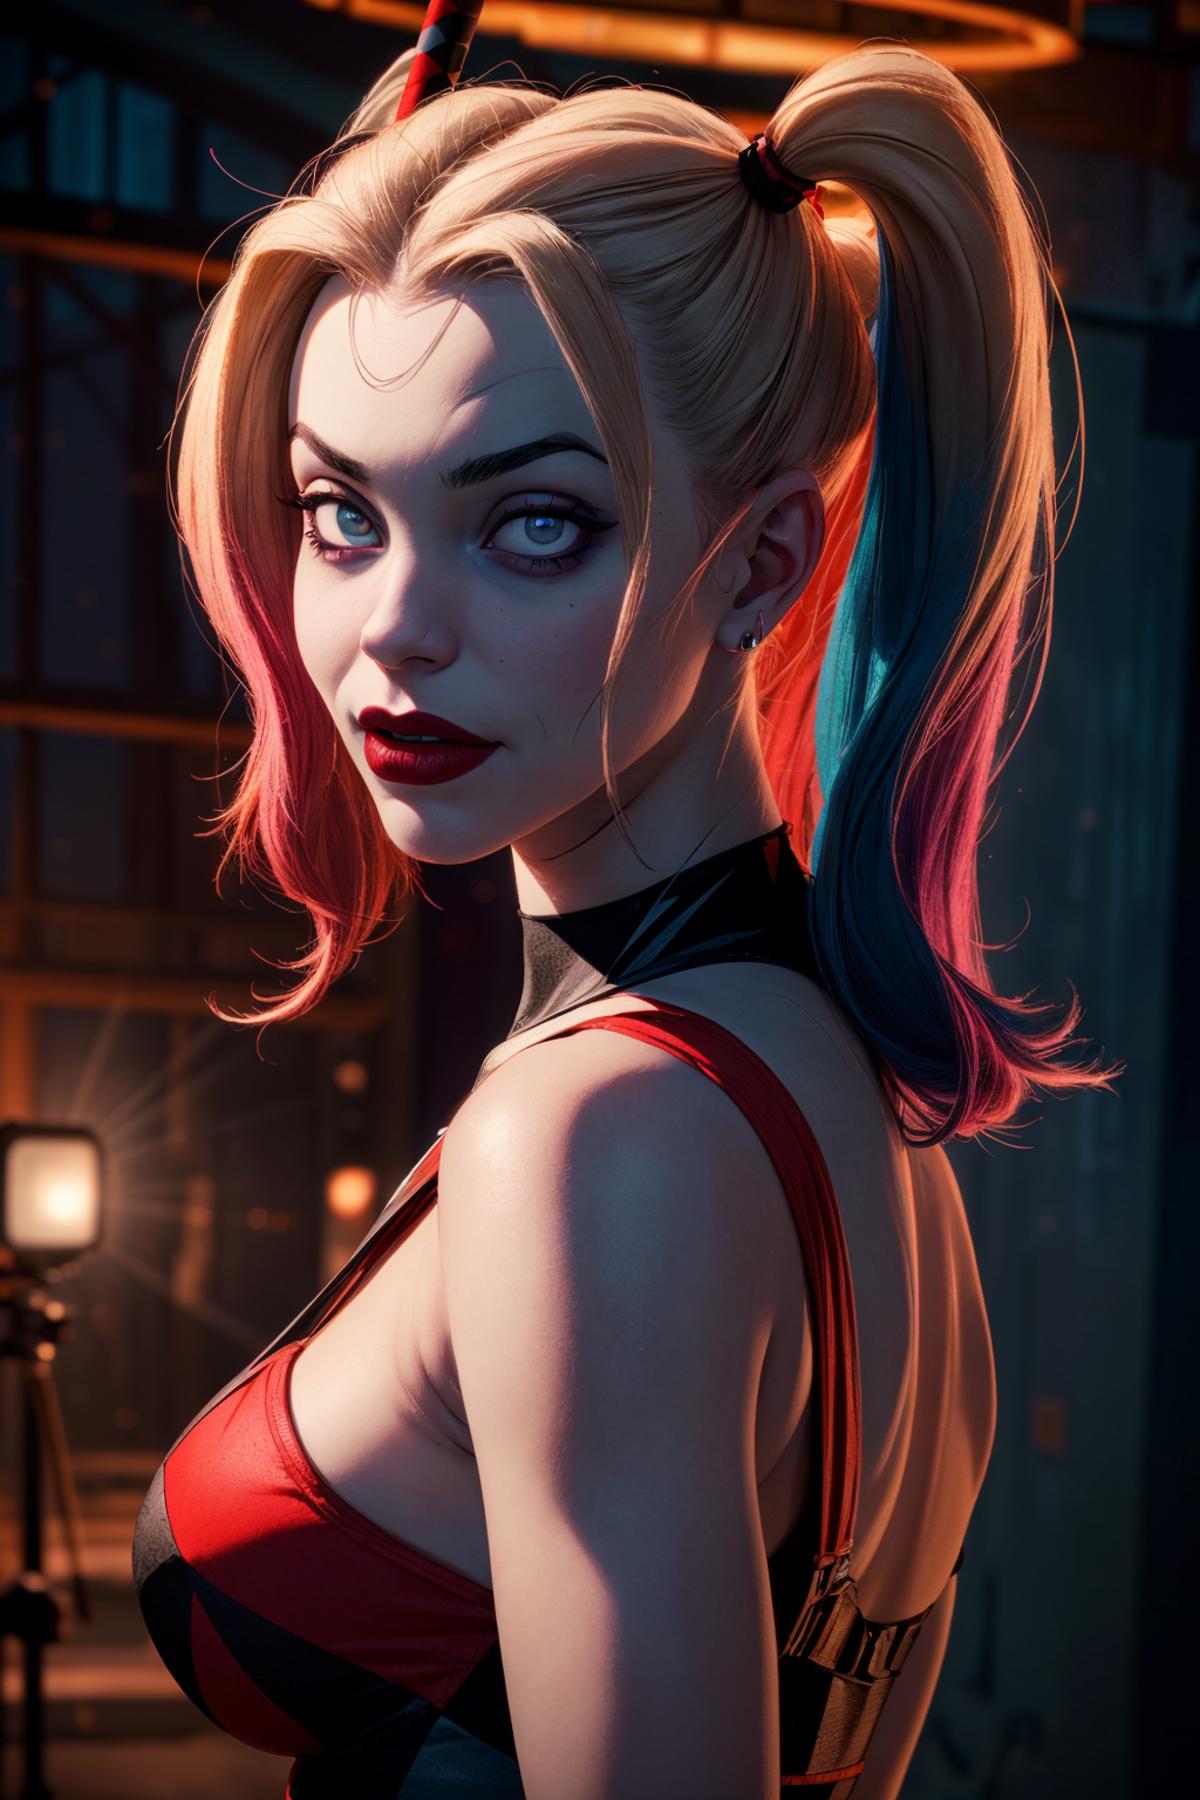 Harley Quinn image by iJWiTGS8